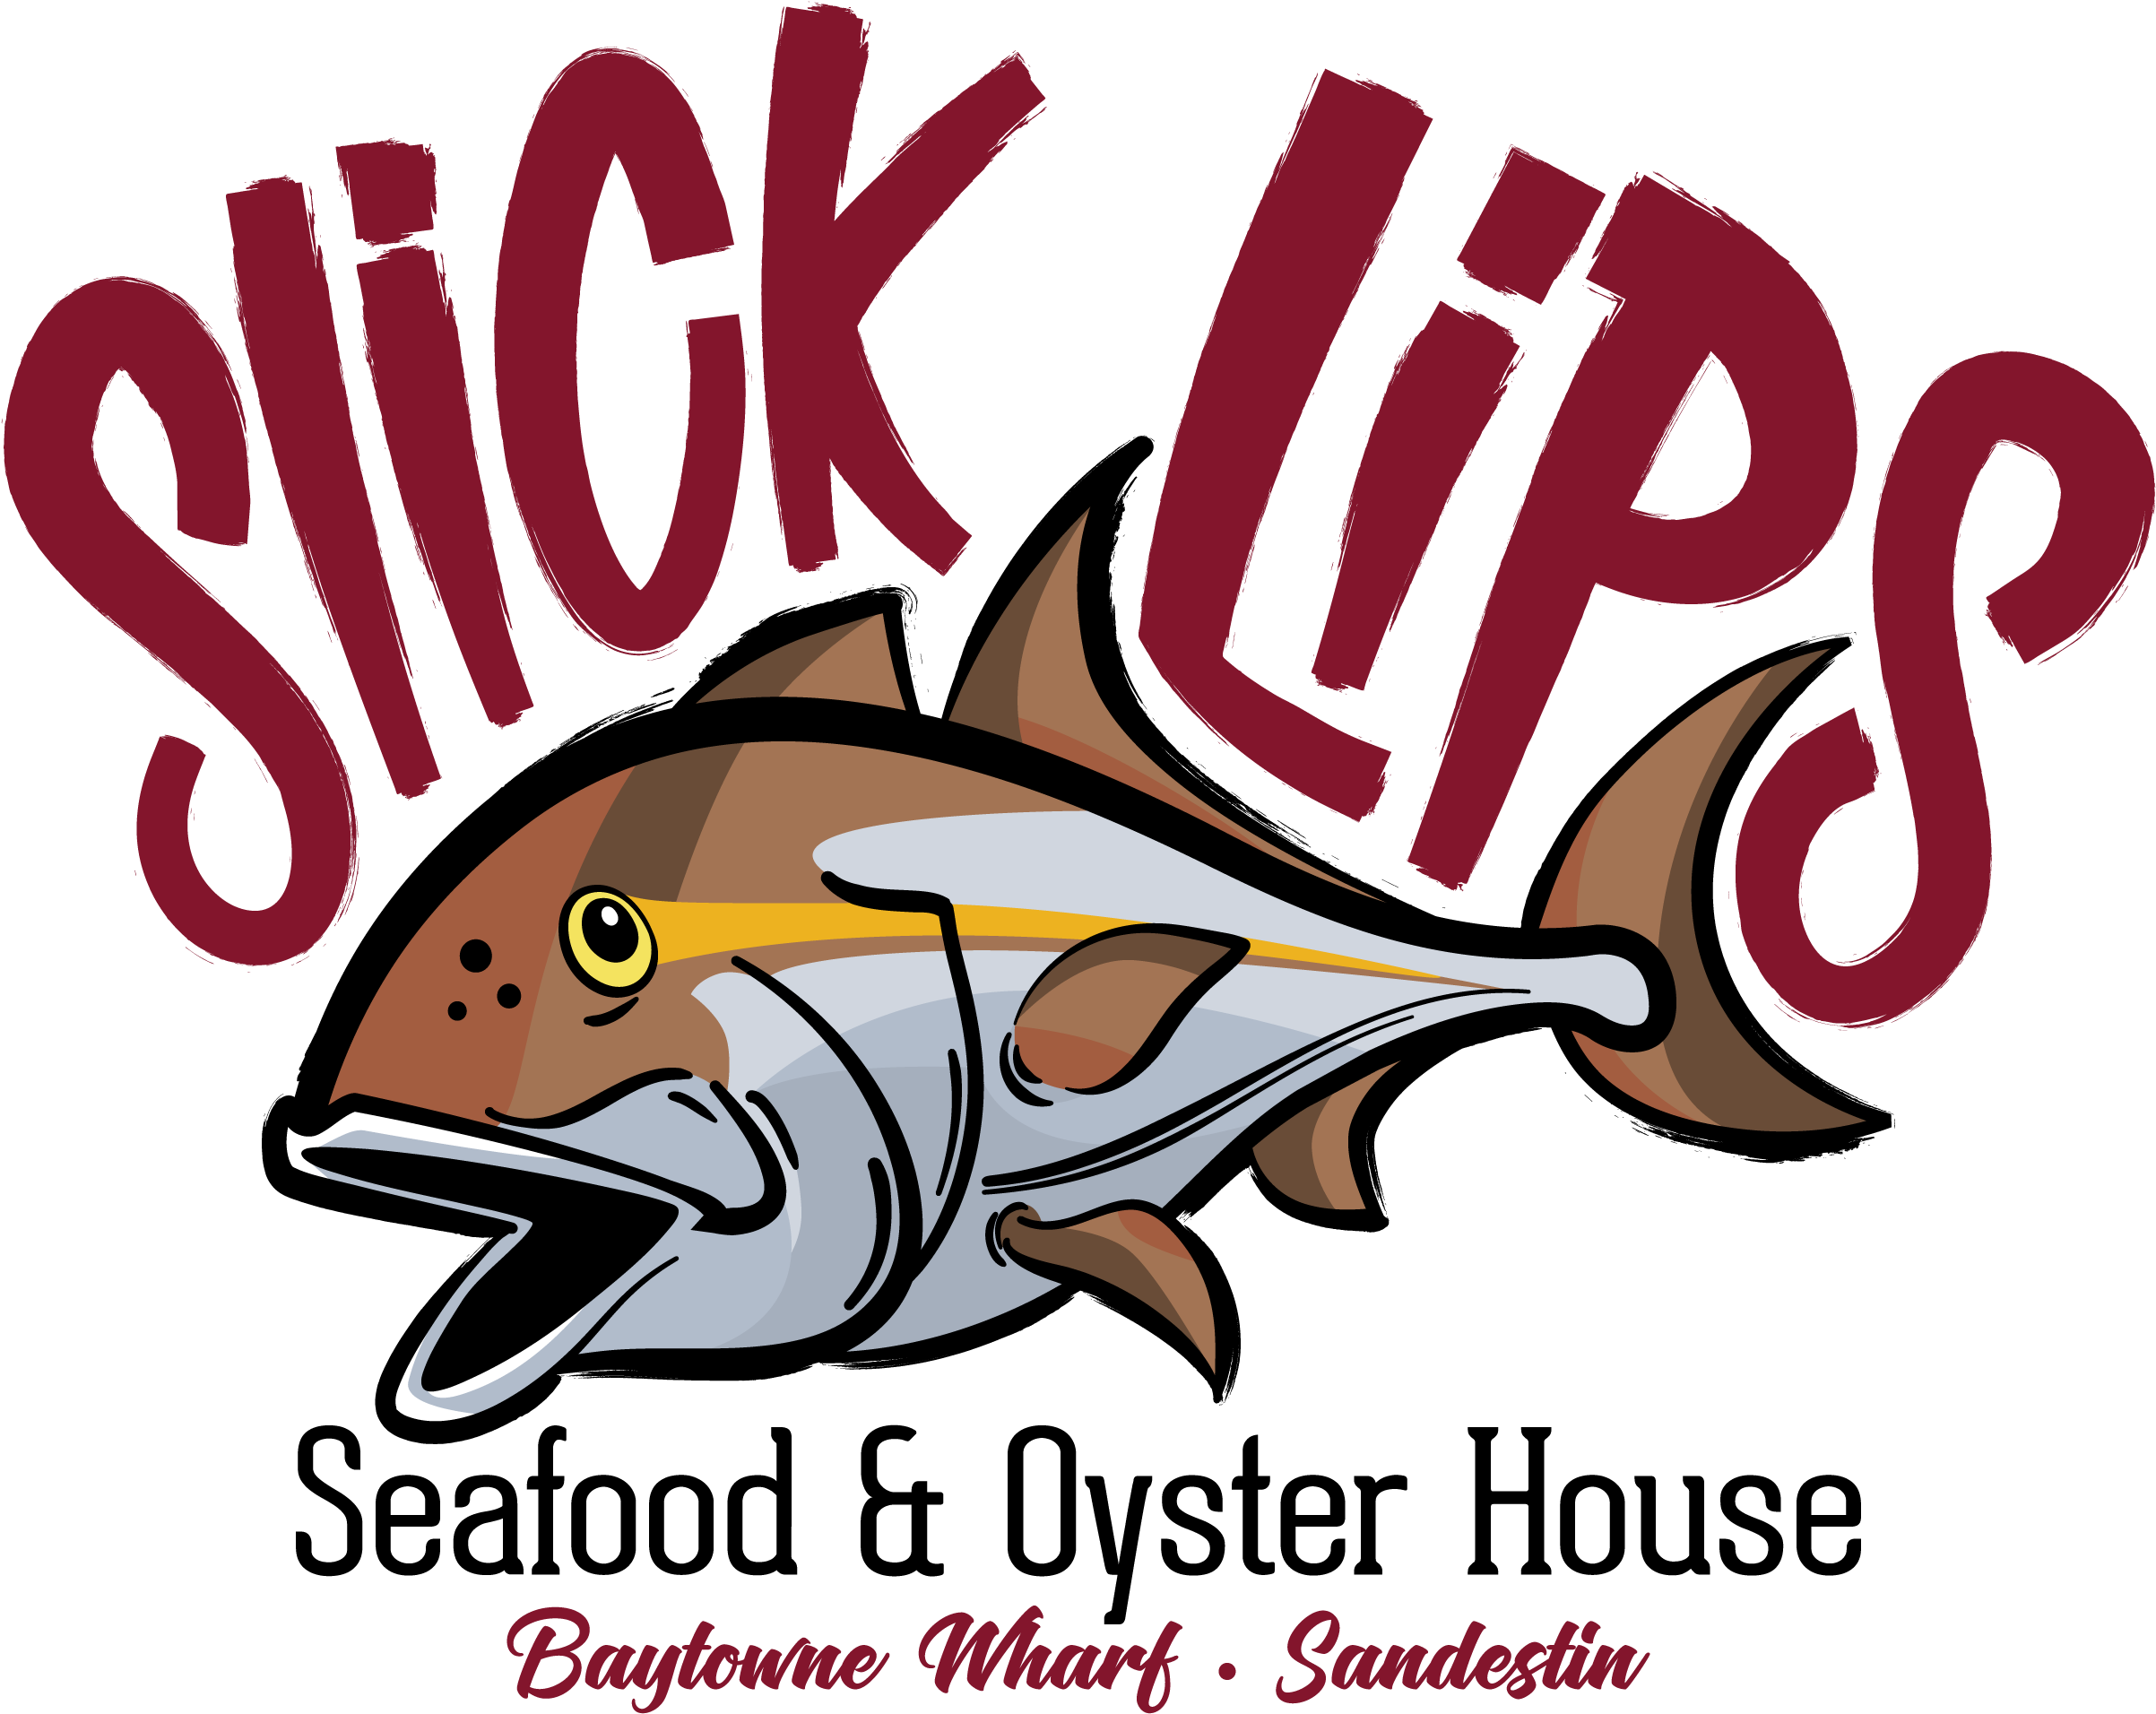 2018 Winners - Slick Lips Seafood (2500x2500)